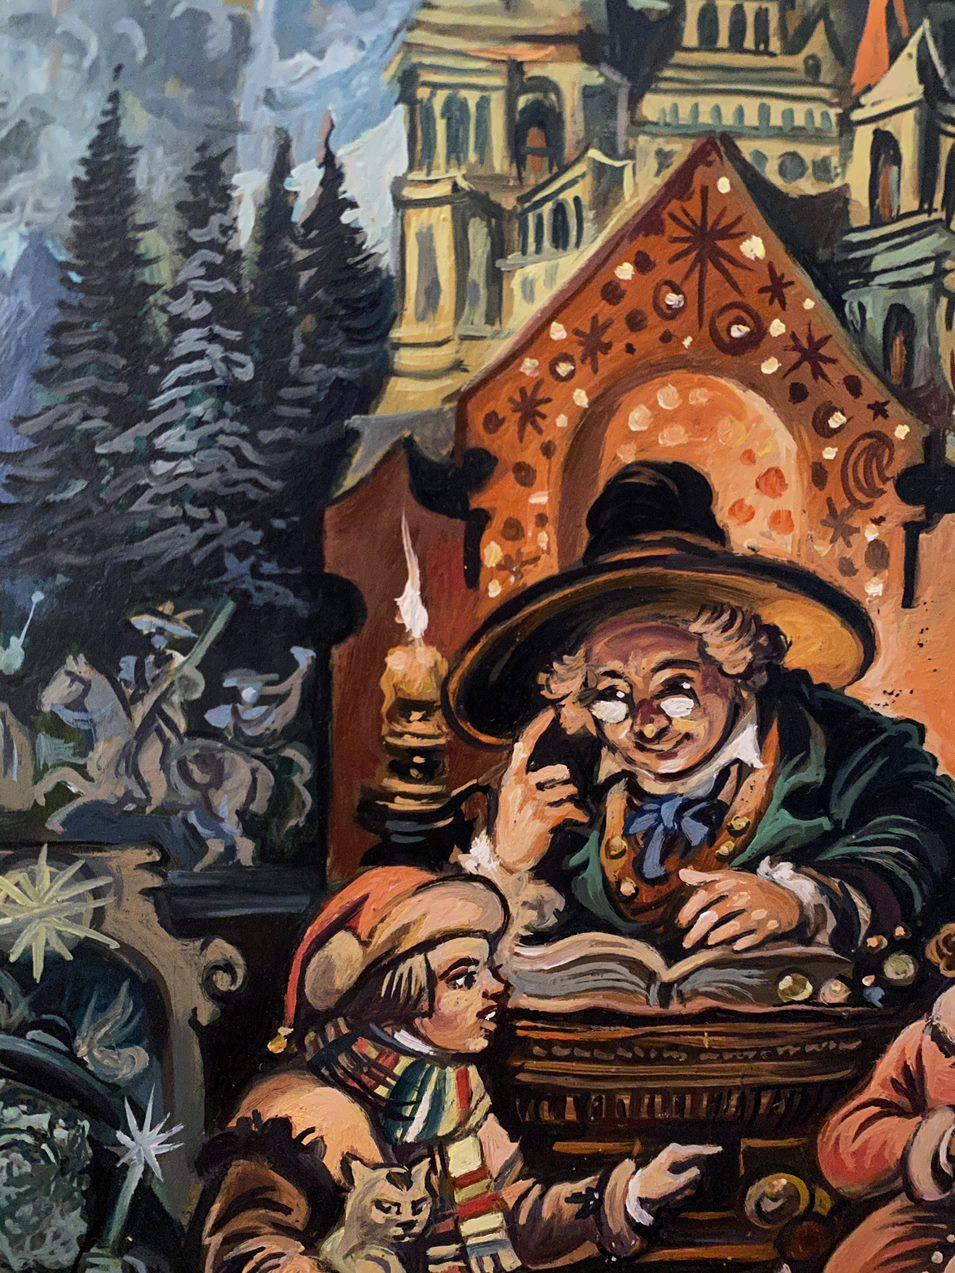 Artist: Alexander Litvinov
Work: Original oil painting, handmade artwork, one of a kind 
Medium: Oil on Cardboard
Style: Classic Figurative
Year: 2004
Title: Christmas
Size: 11